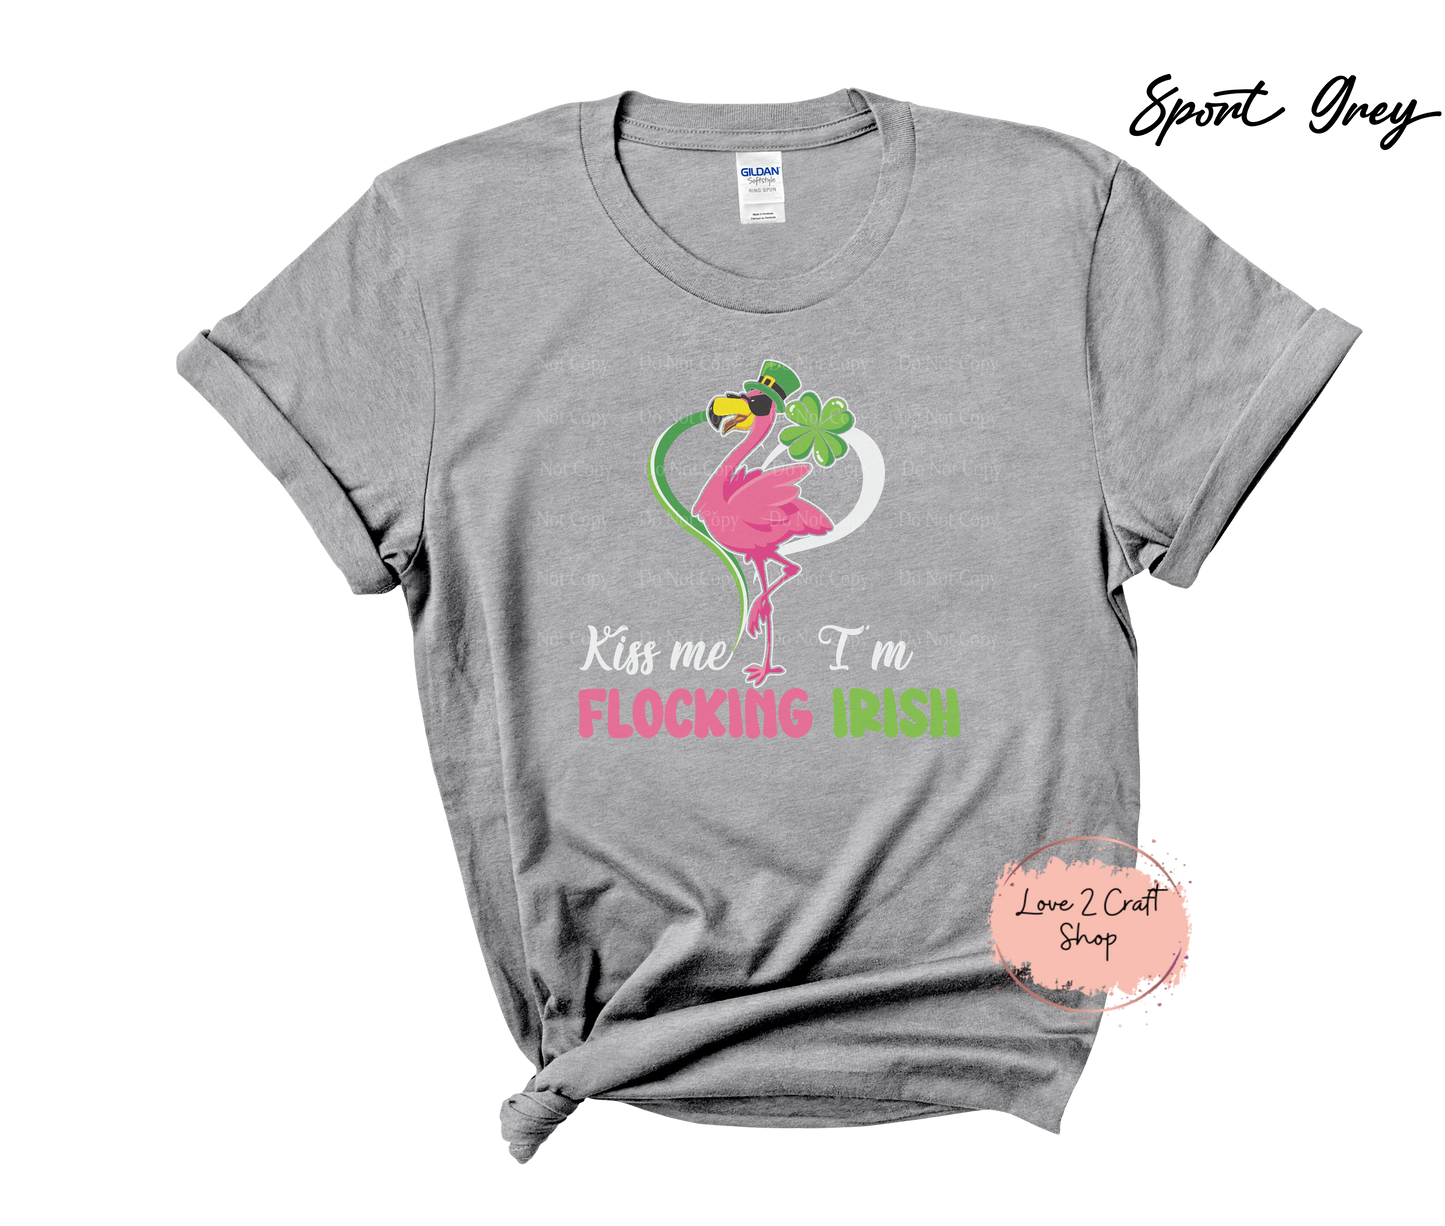 St Patrick's day Kiss me Flamingo T-Shirt